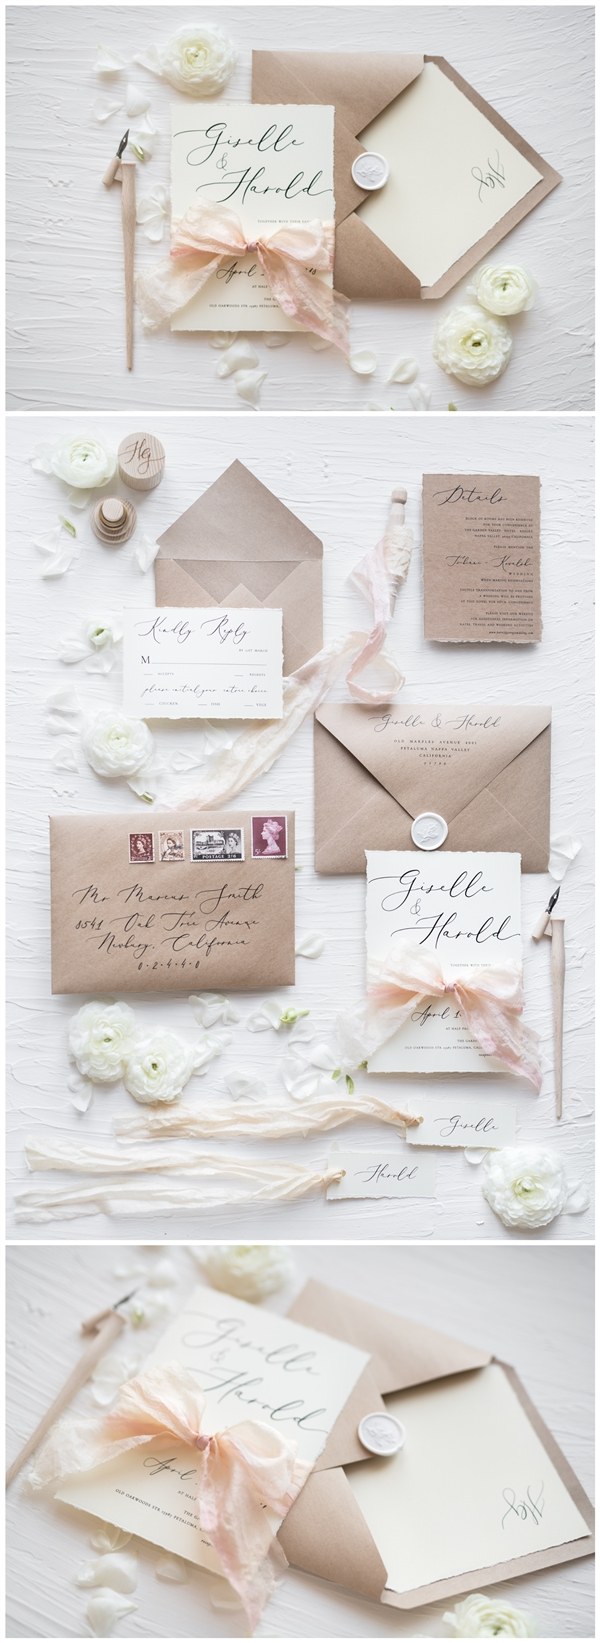 Rustic kraft paper calligraphy wedding invitations